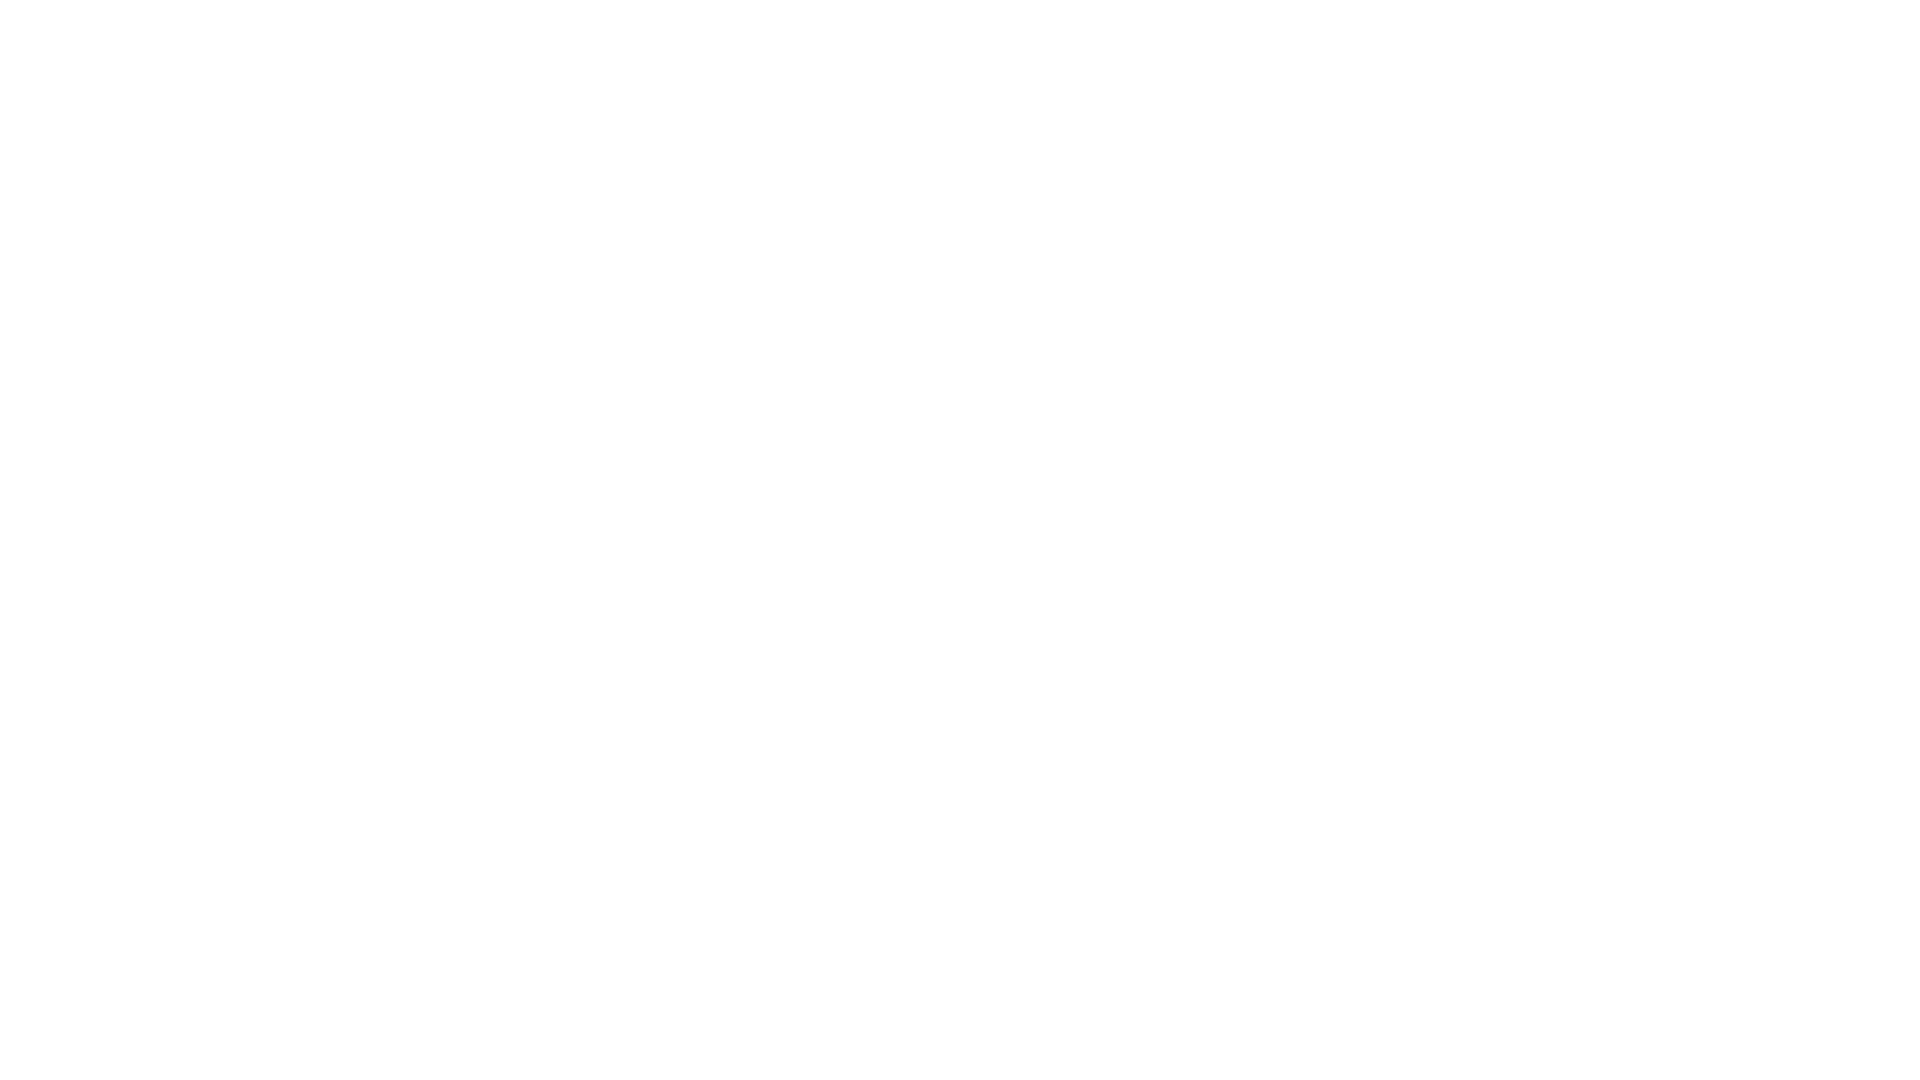 First Baptist Church of Centralia